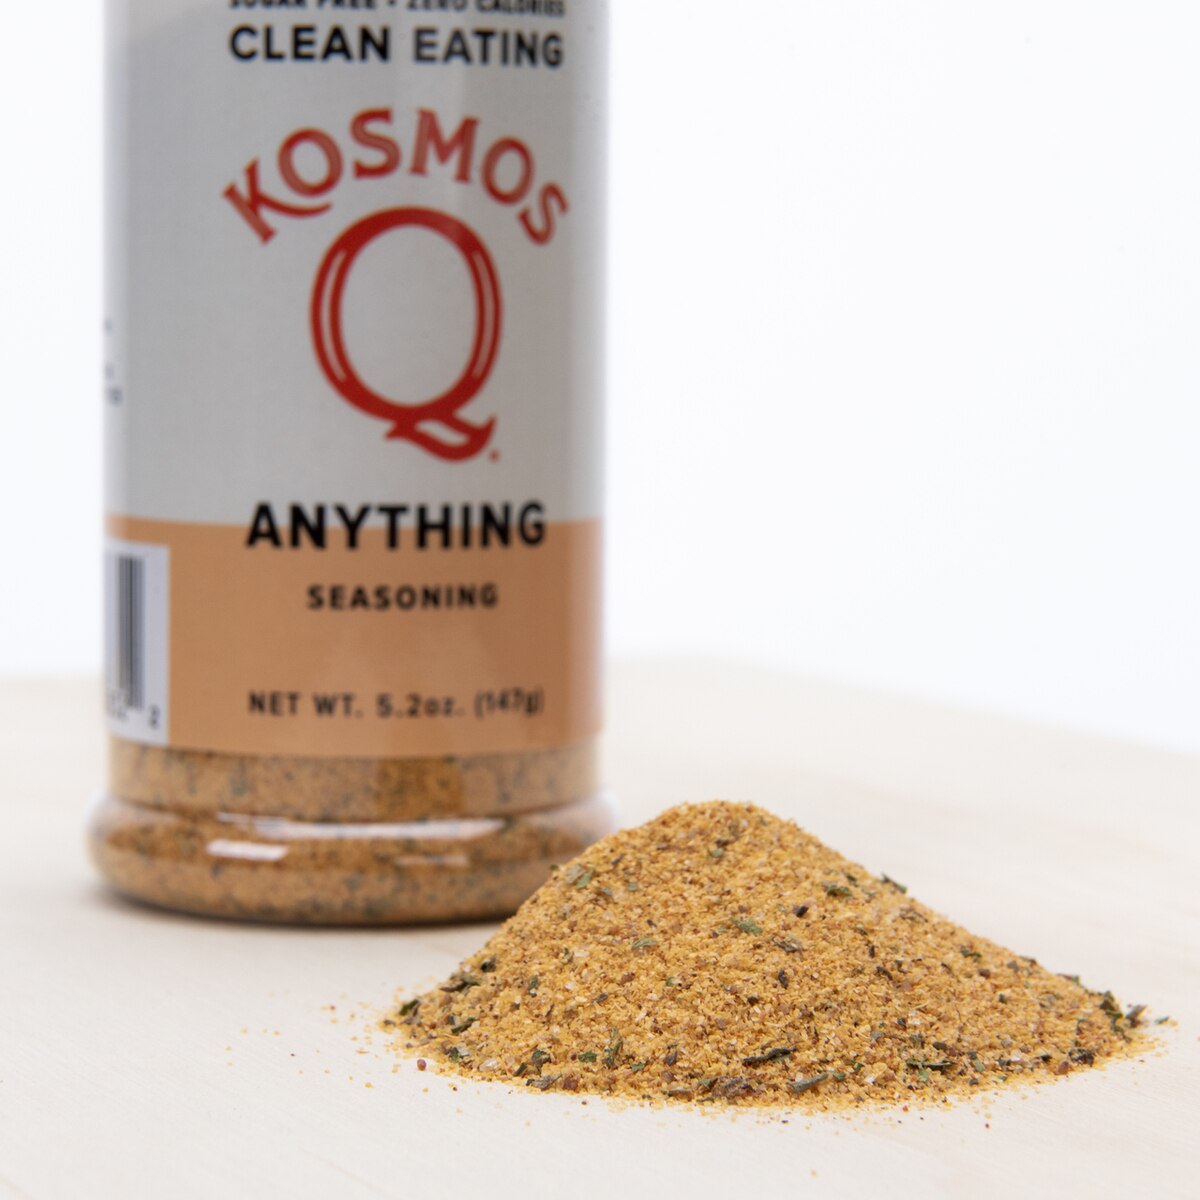 Q-Salt: All-purpose Seasoning — Naturiffic